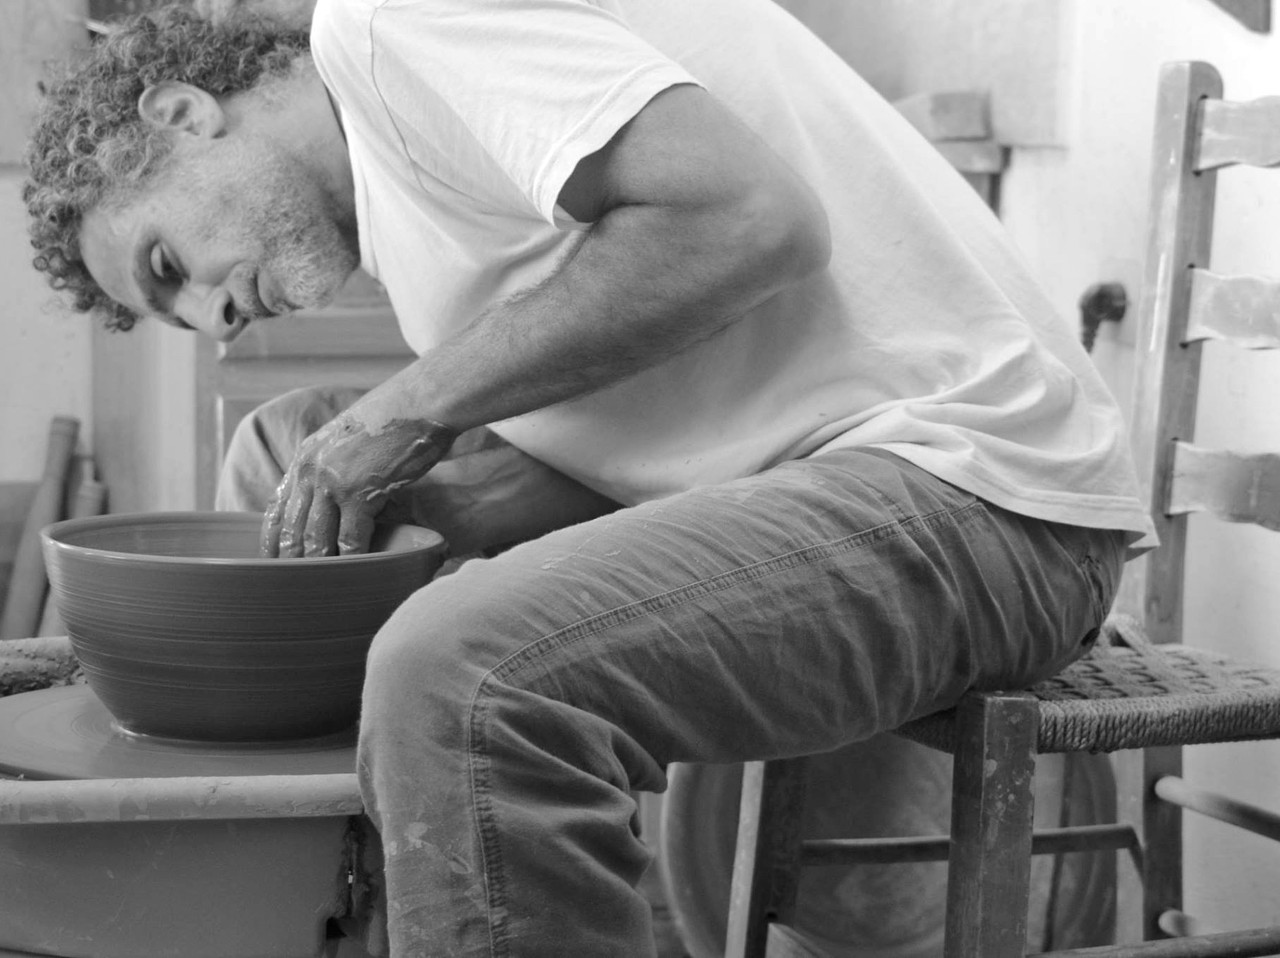 Five-day Ceramic Workshop Margarites Village Crete, best ceramic workshop rethymno crete, ceramic workshop rethimno crete, activities rethimno crete, art creativity workshop crete, things to do crete, best ceramic studio rethimno crete, ea ceramic workshops 